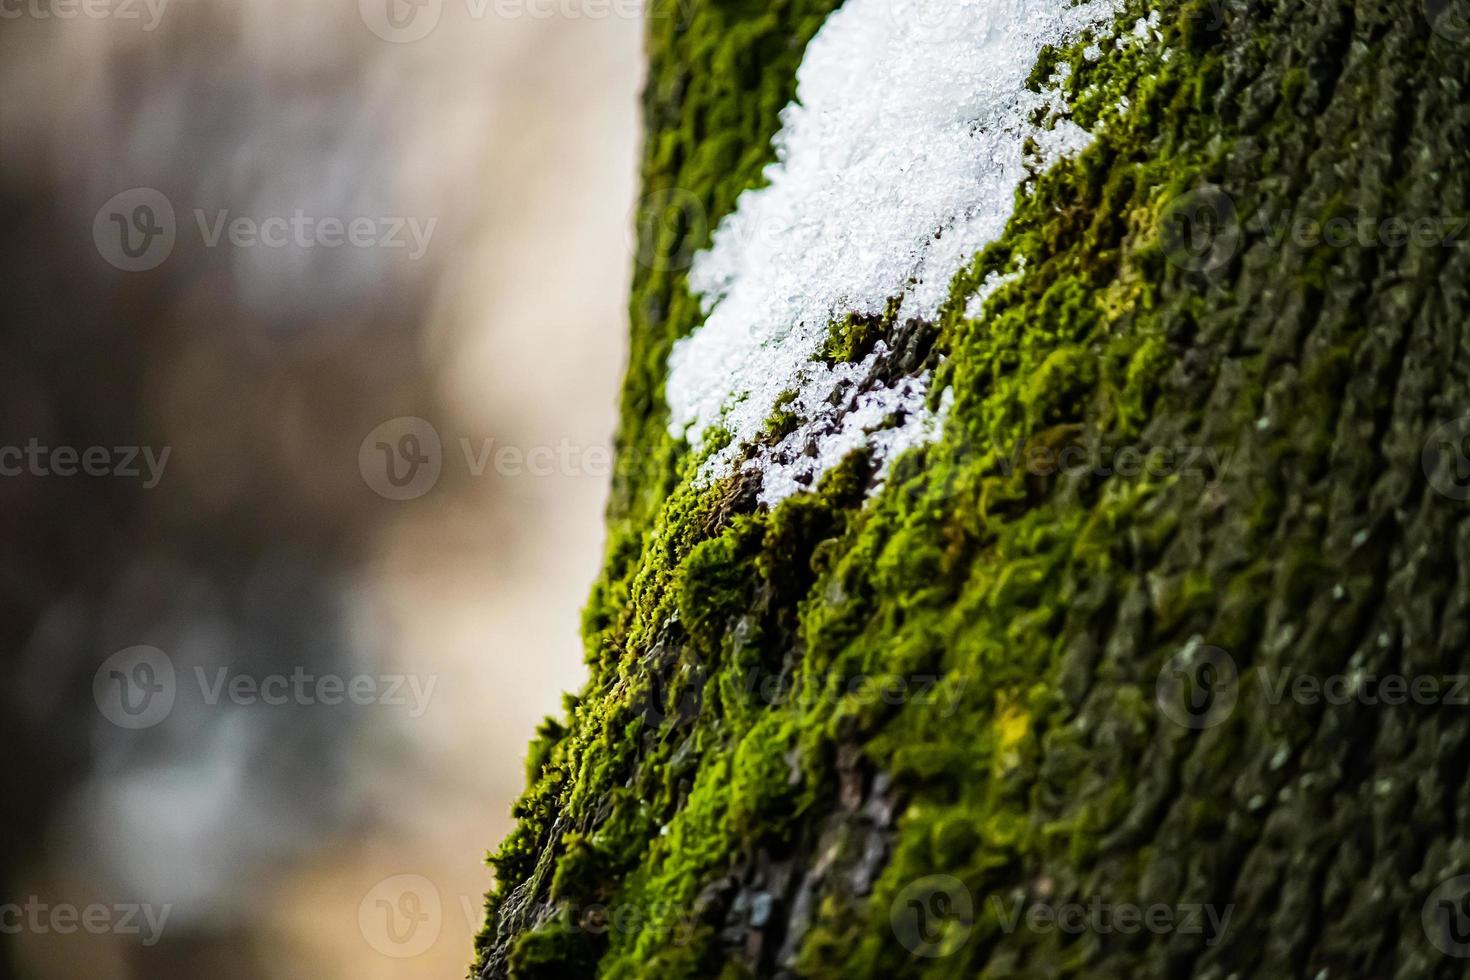 musgo verde na árvore. líquen de perto. textura da casca coberta com esfagno. foto